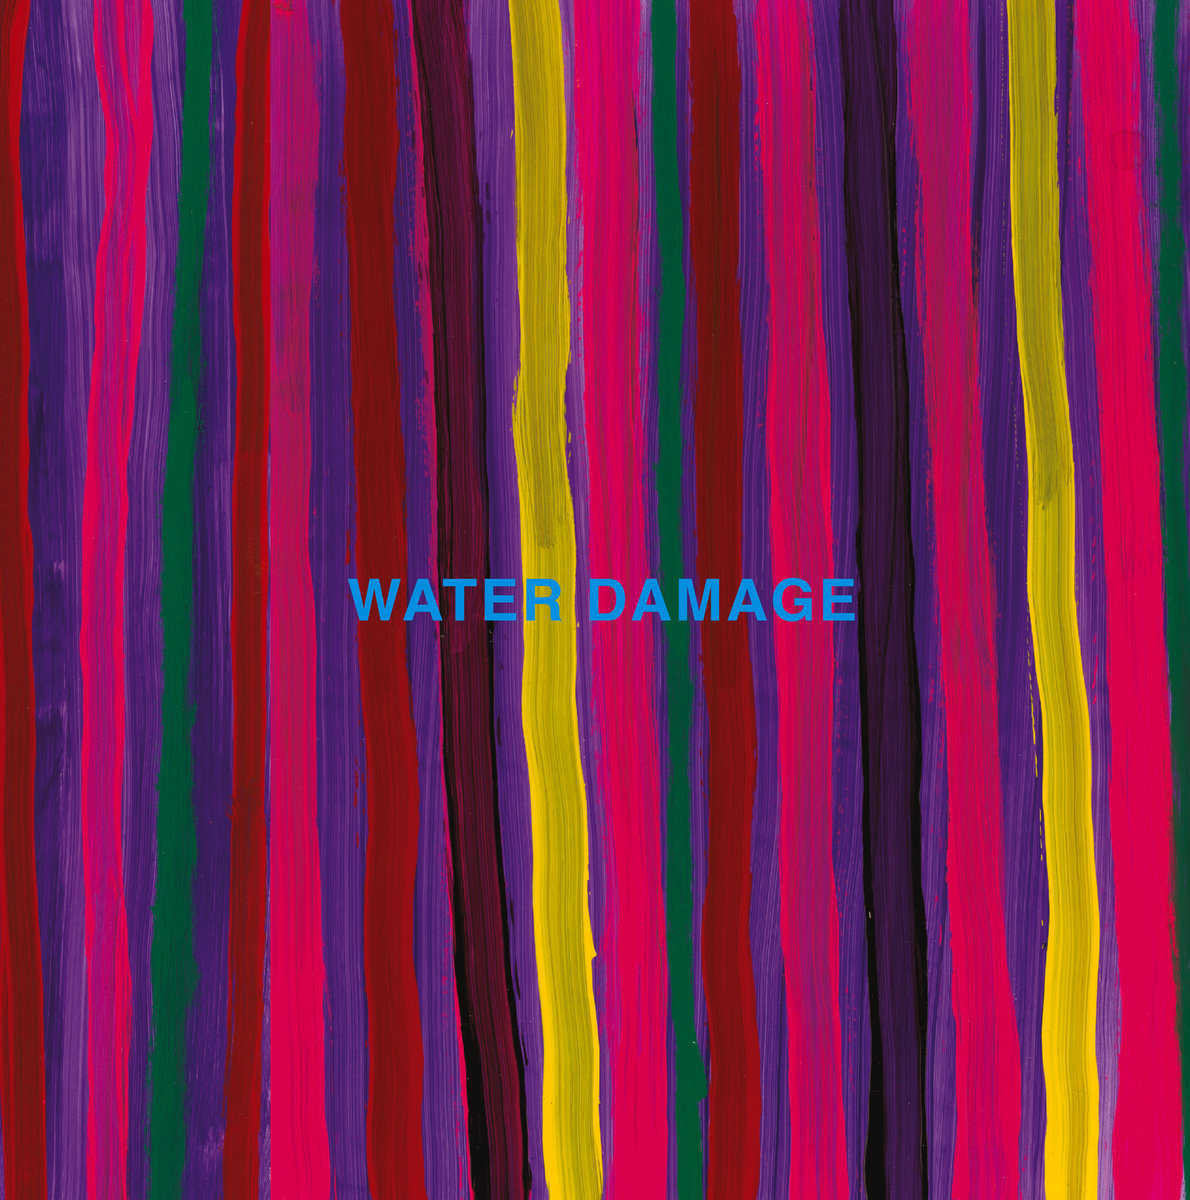 Water Damage "2 Songs"